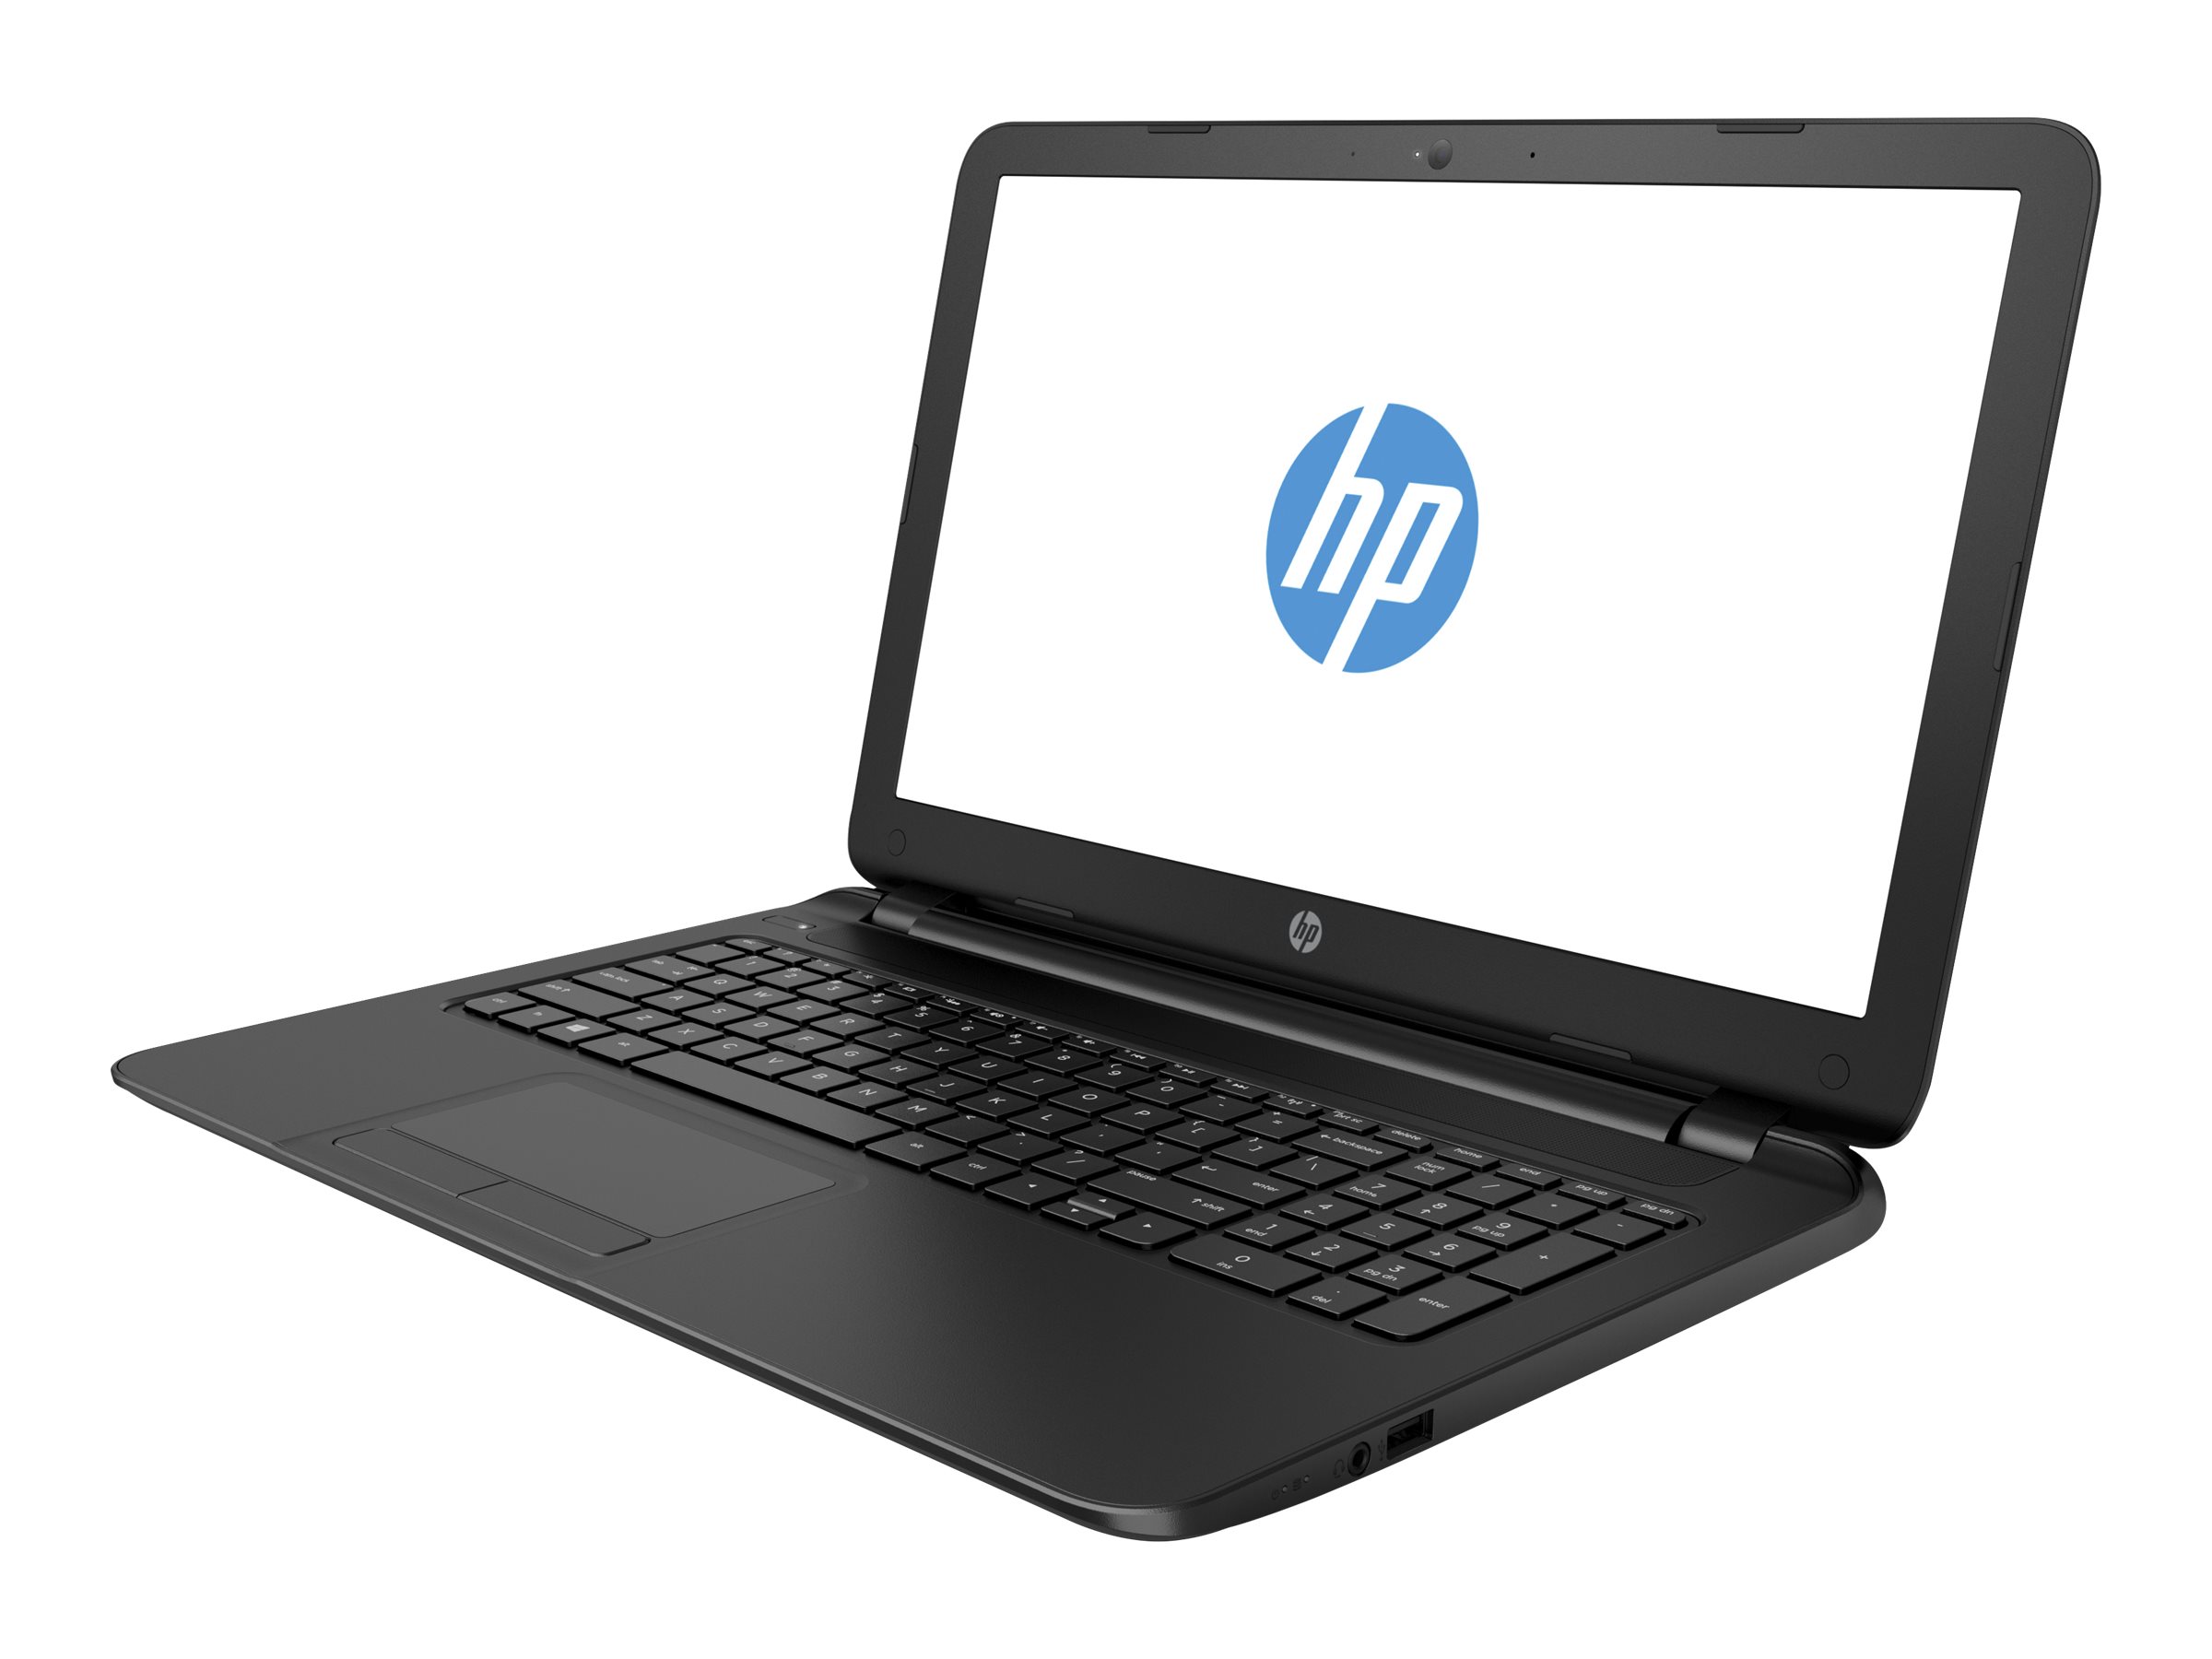 HP 15.6" Laptop, AMD E-Series E1-2100, 500GB HD, Windows 8.1, 15-f009wm - image 1 of 3